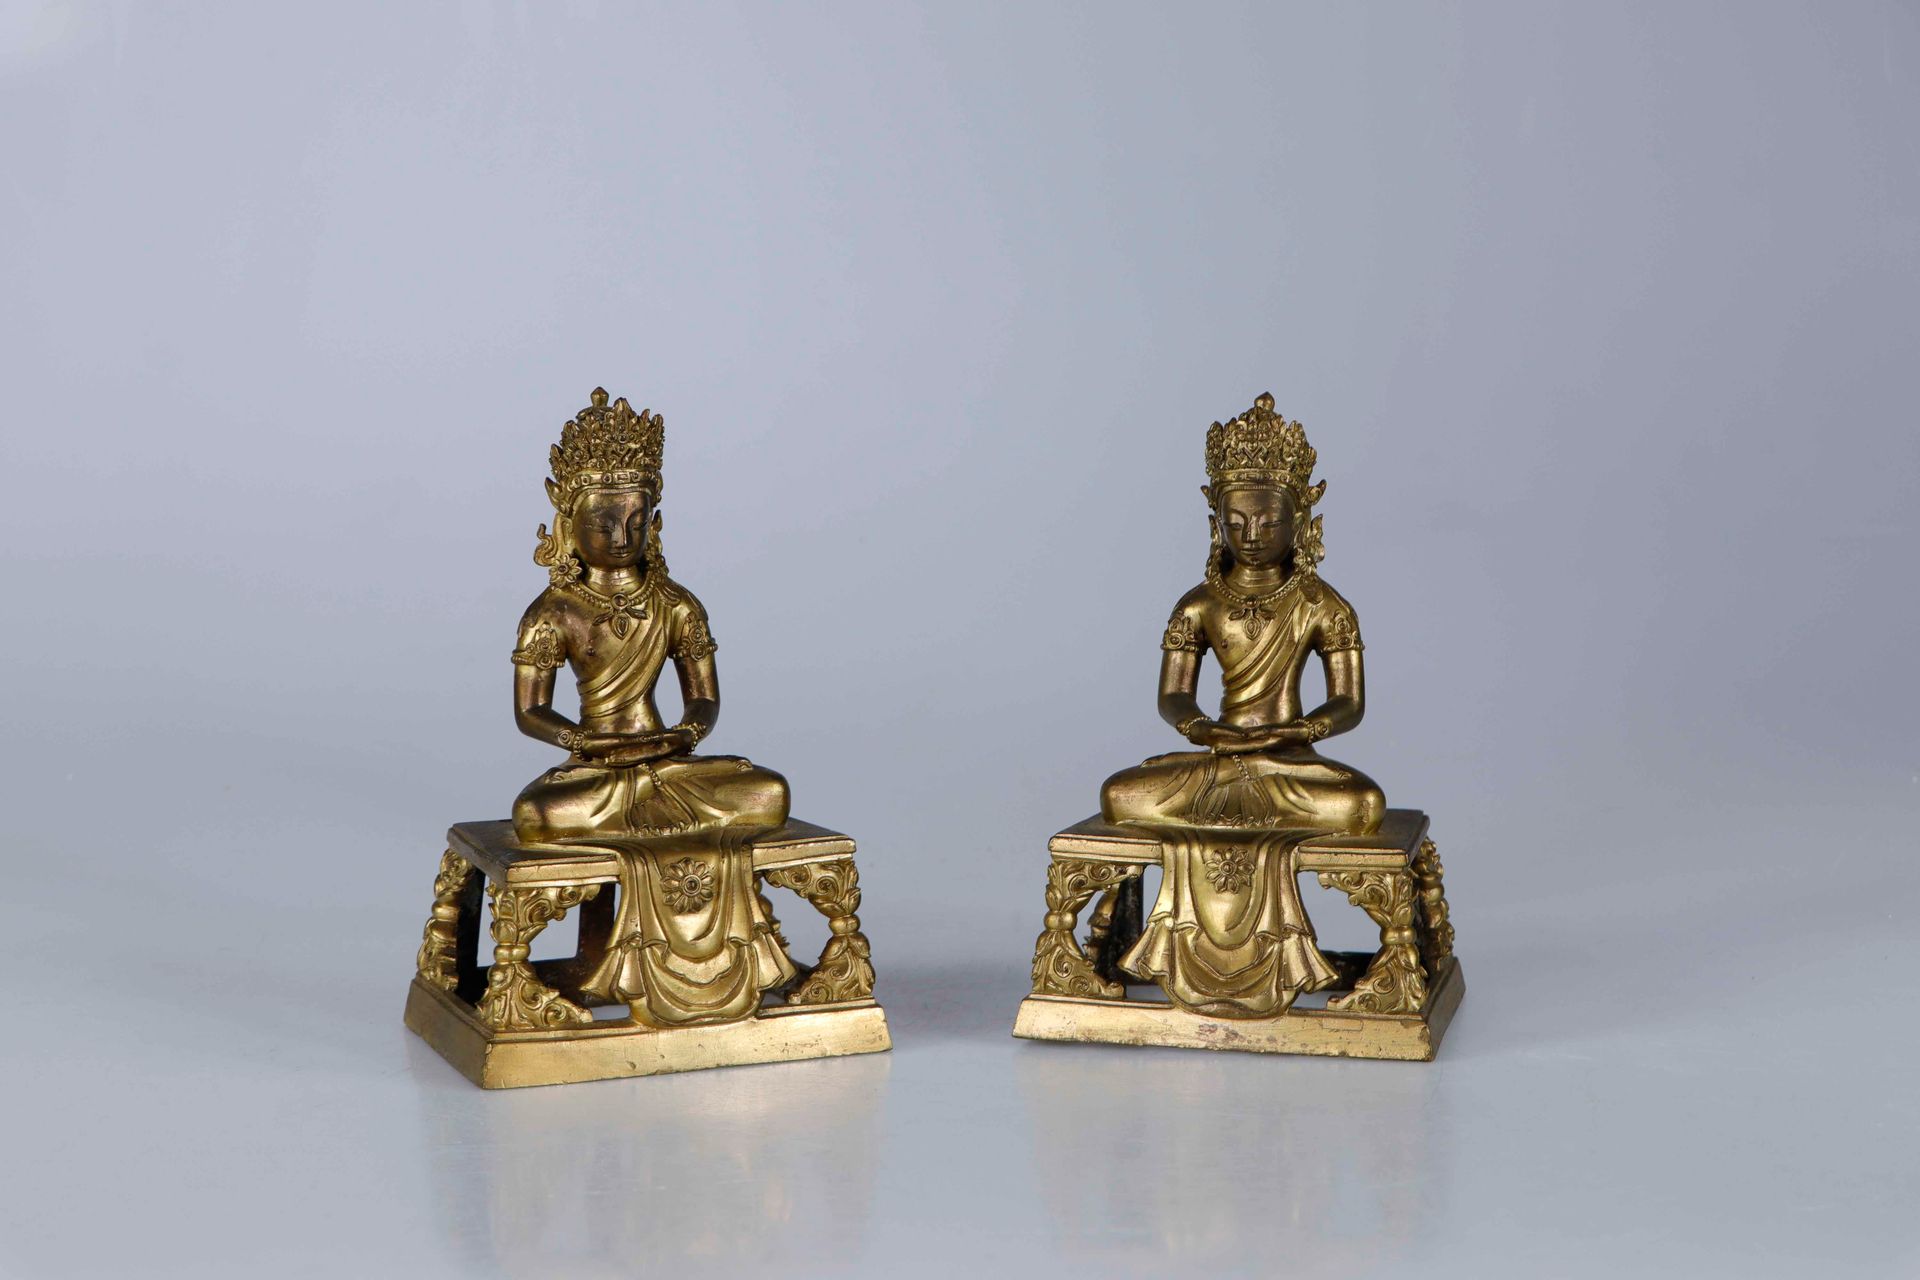 Null (2)中国，嘉龙时期。鎏金铜和铜合金的阿弥陀佛像一对。他们在一个镂空的四方形底座上坐着，双手持禅定，身穿Dhoti，佩戴珠宝，面容安详，头发梳成发髻，&hellip;